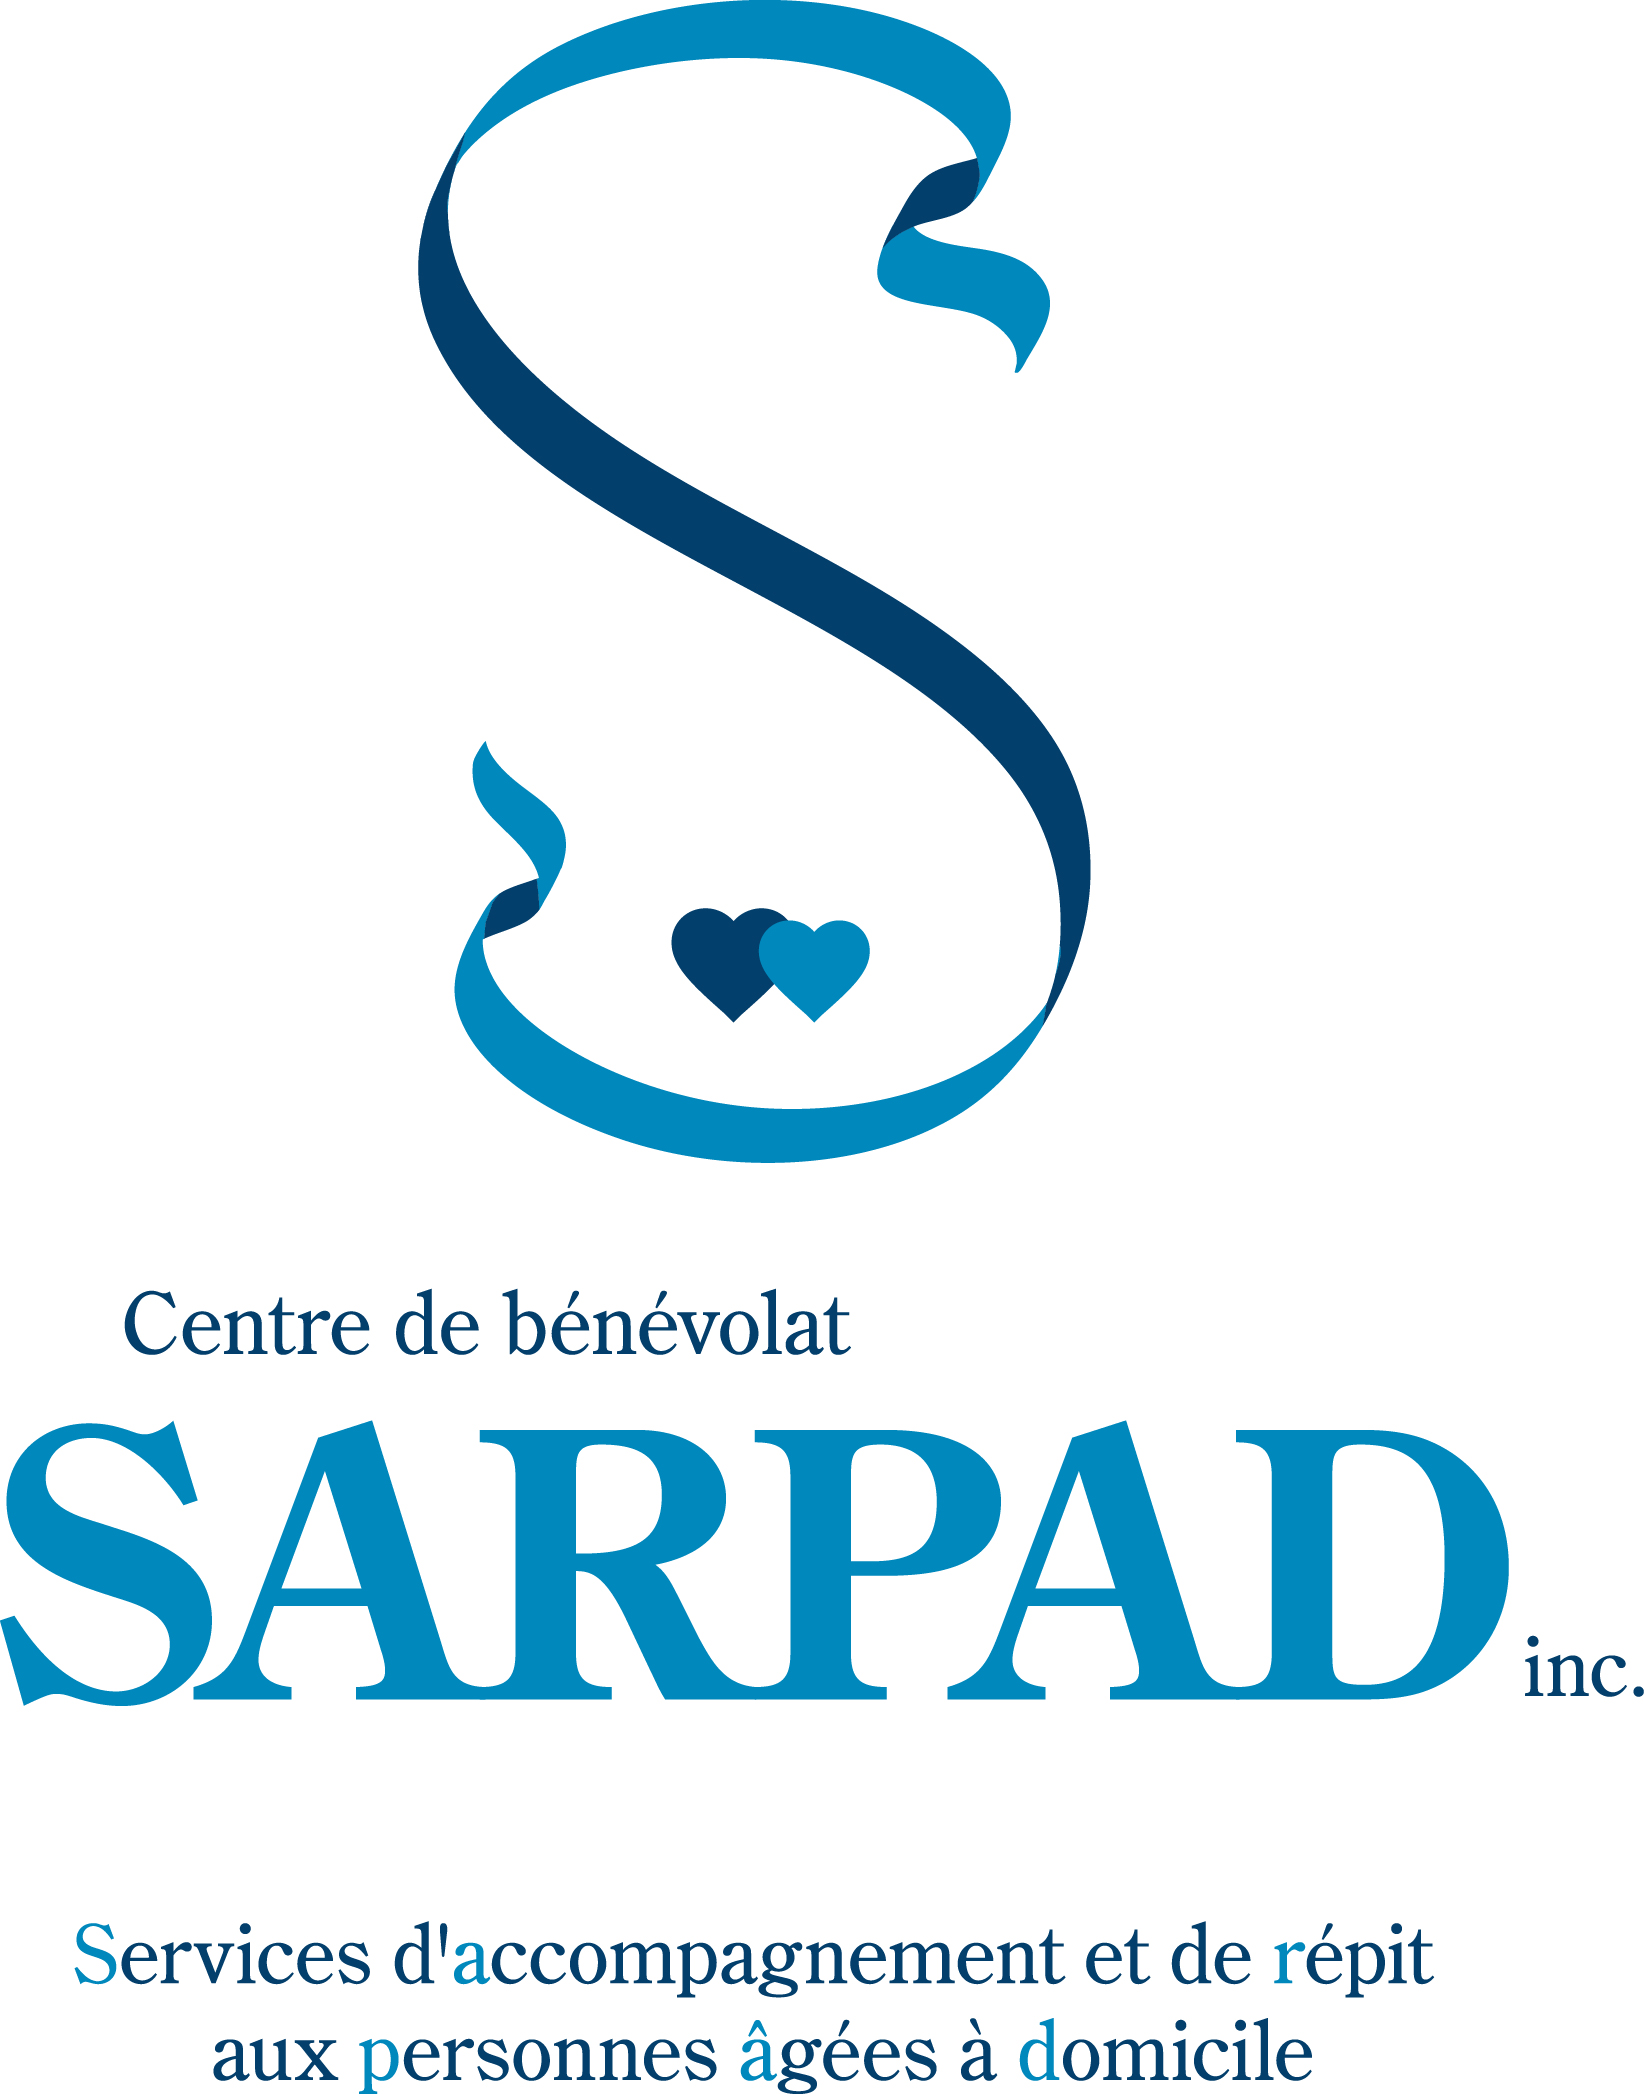 Centre de bénévolat SARPAD